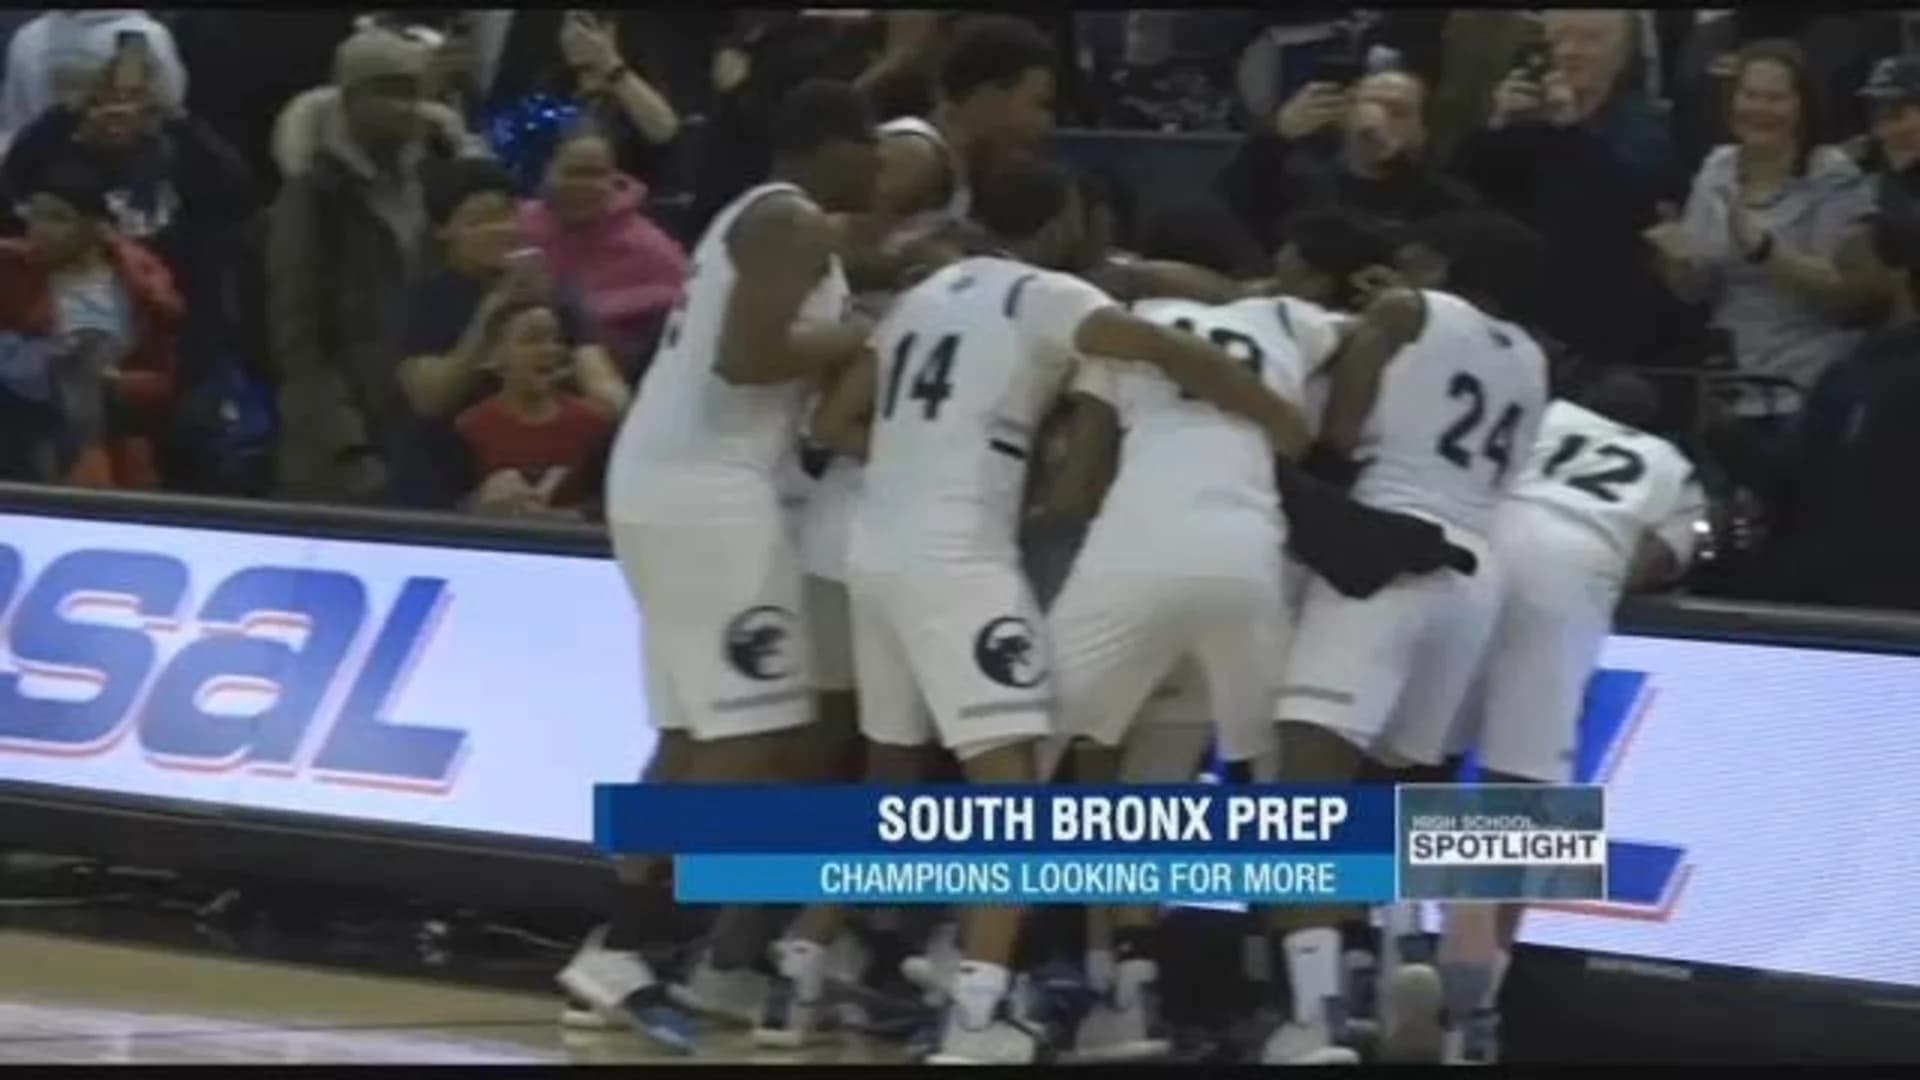 South Bronx Prep focuses on state championship